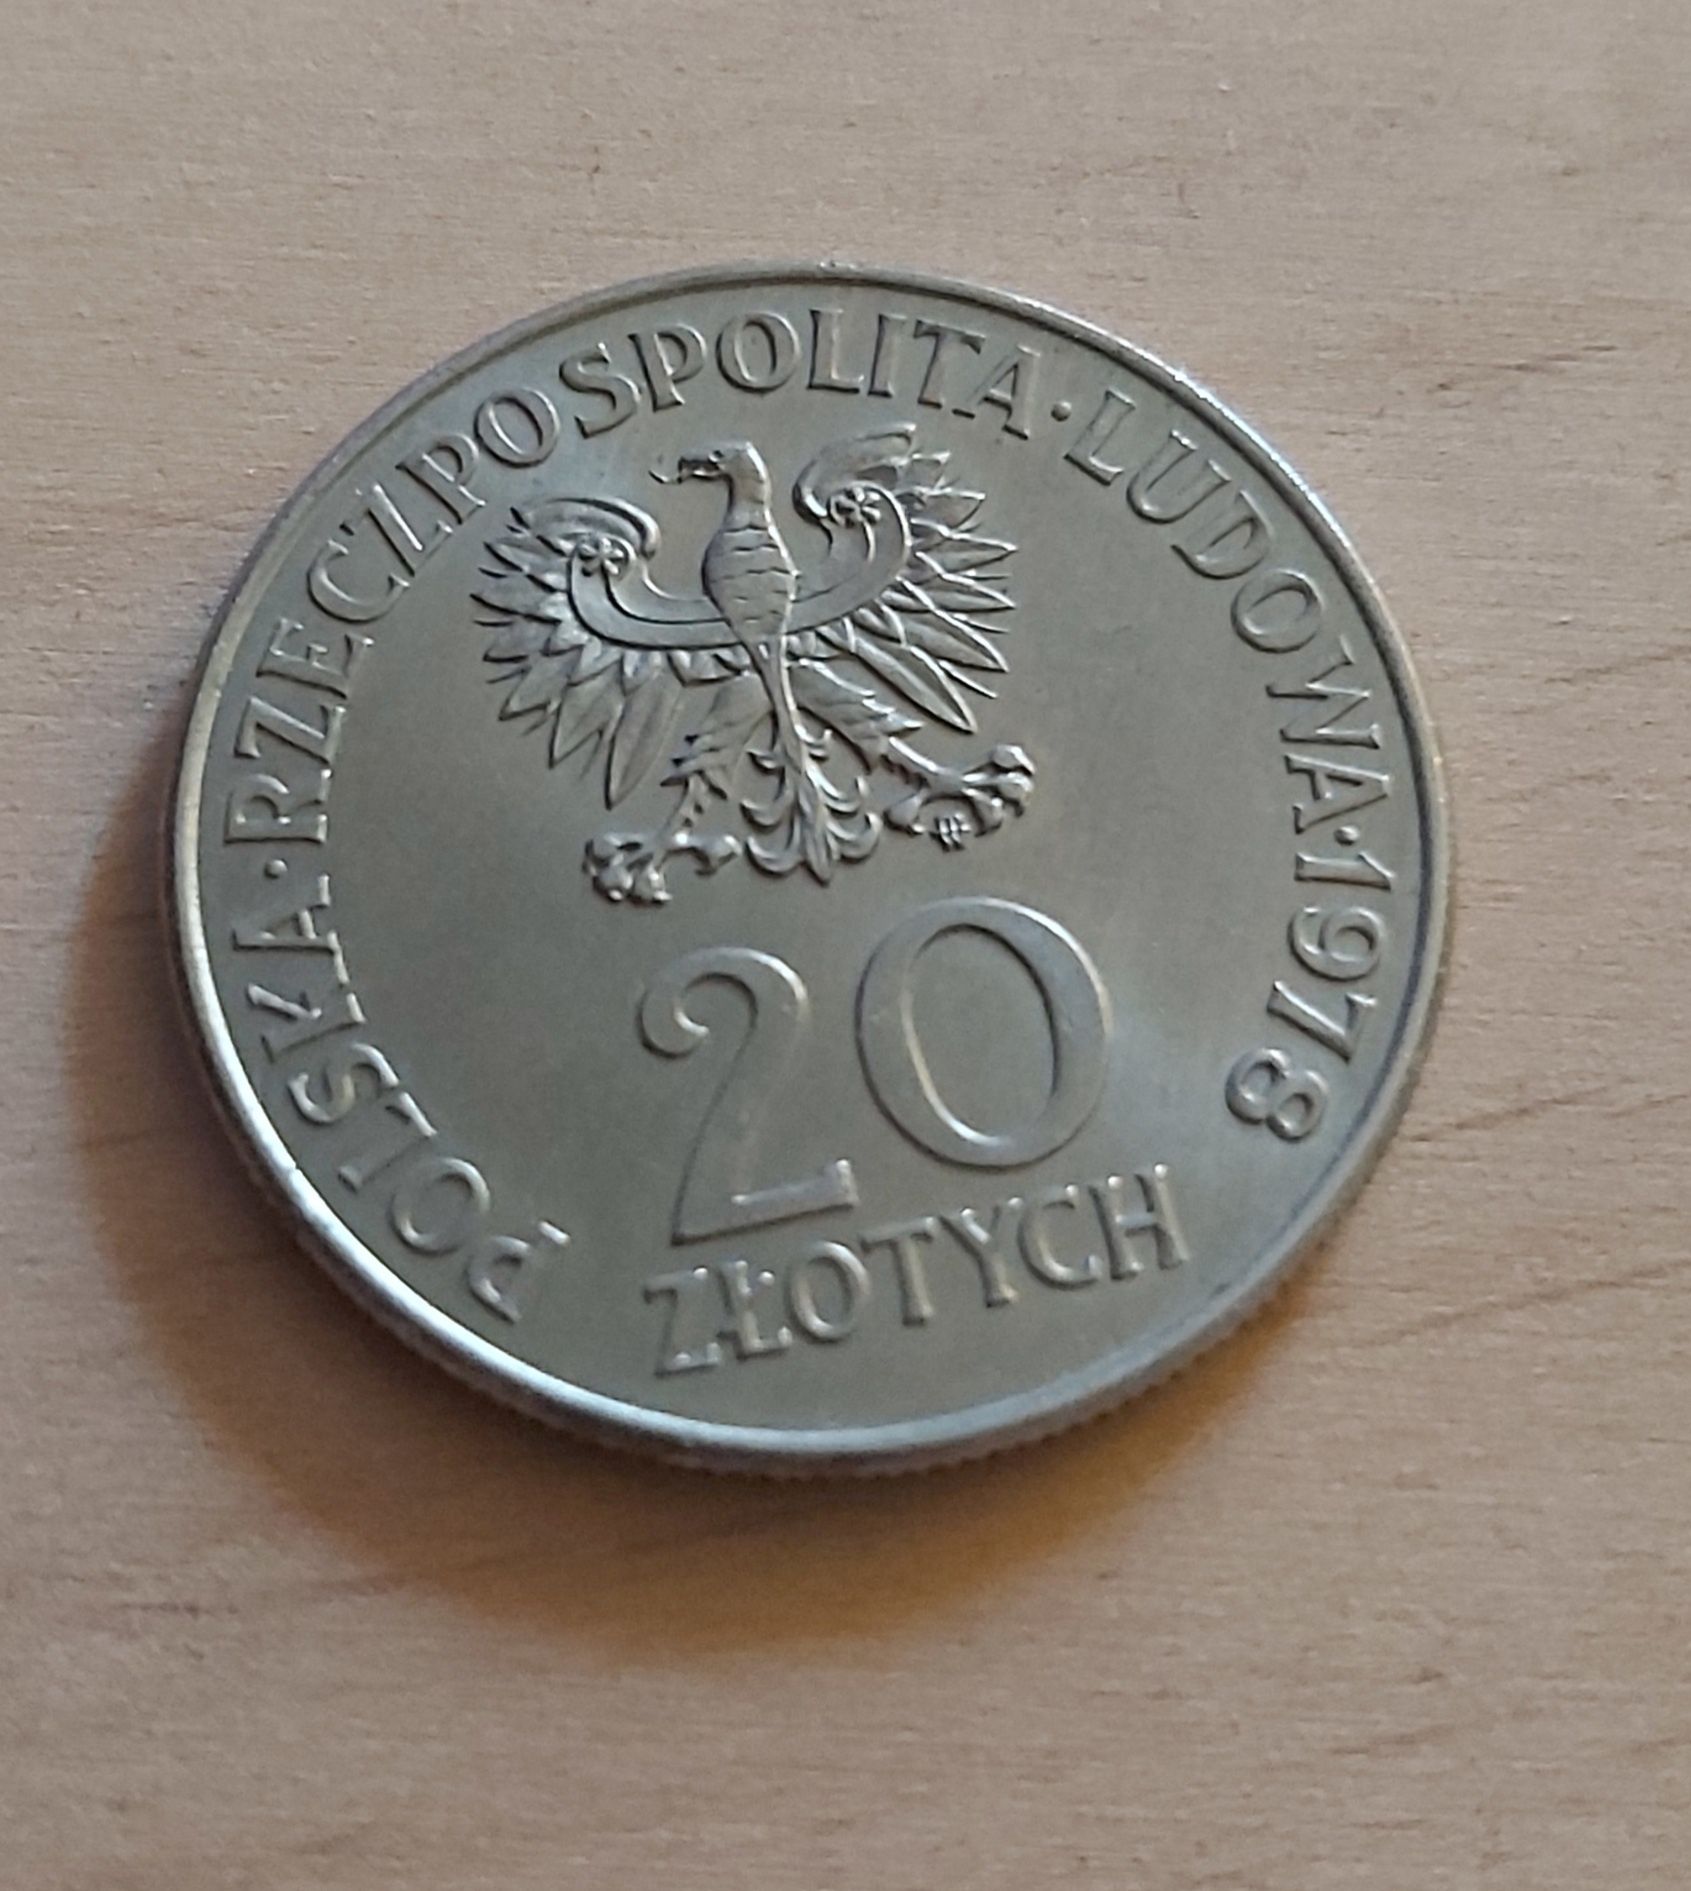 Moneta 20zł Pierwszy Polak w Kosmosie 1978 r.